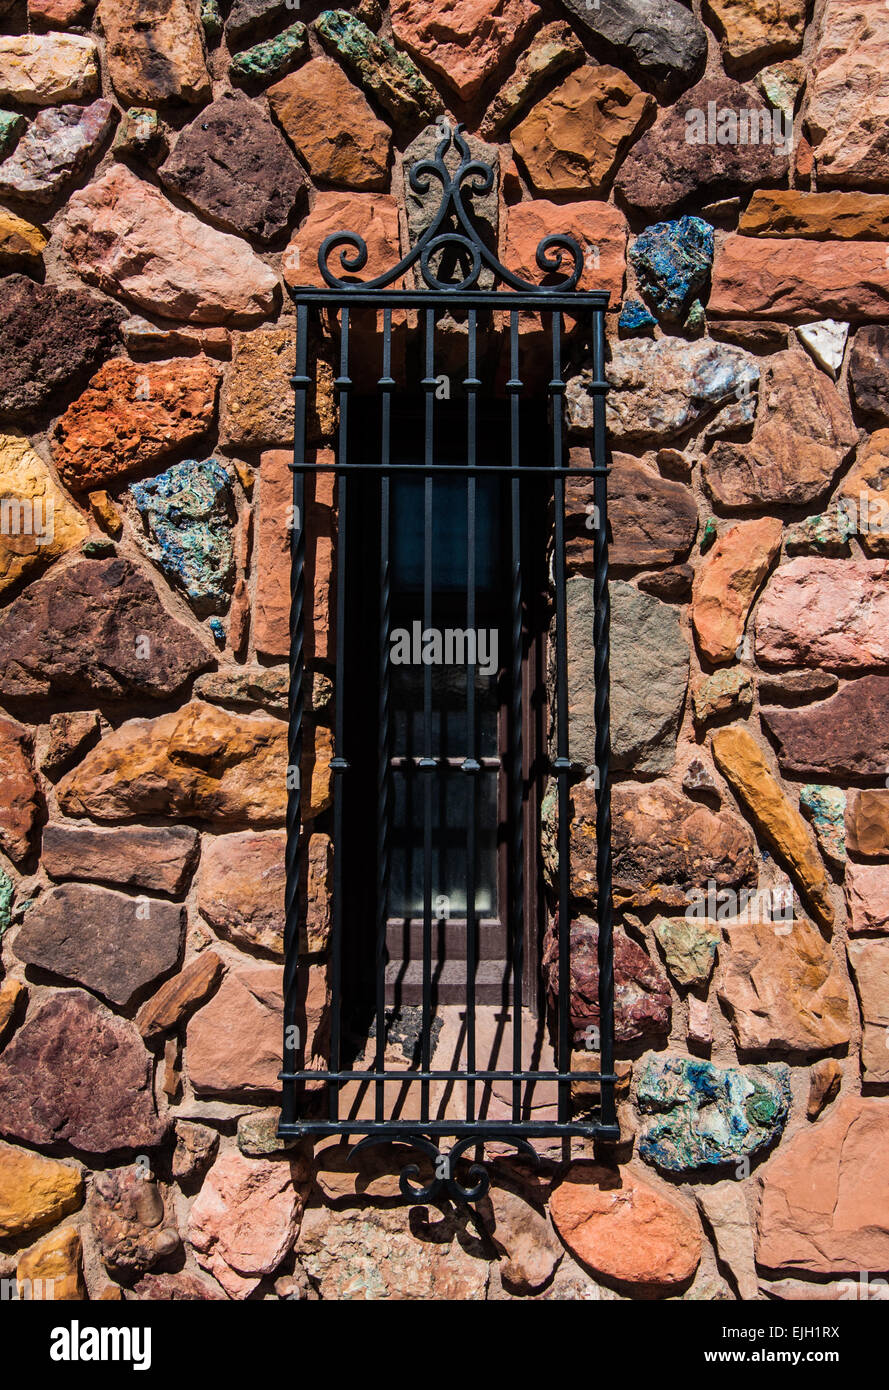 Ornate cast iron bars cover the window of a historic rock masonry Mormon church in Cedar City, Utah. Stock Photo